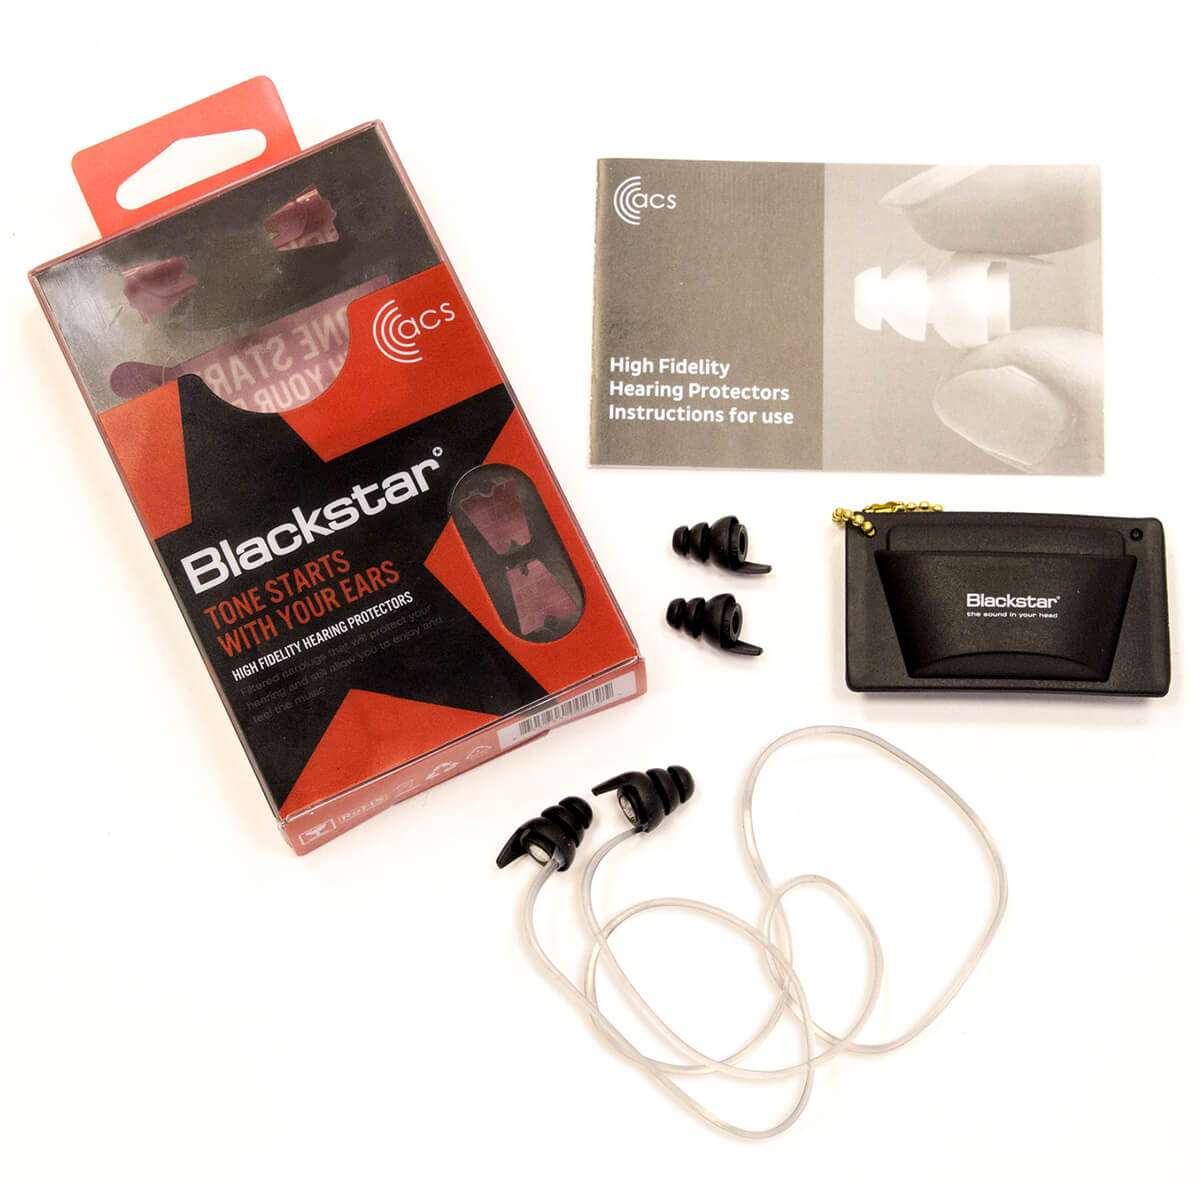 Blackstar ACS Ear Plugs Set